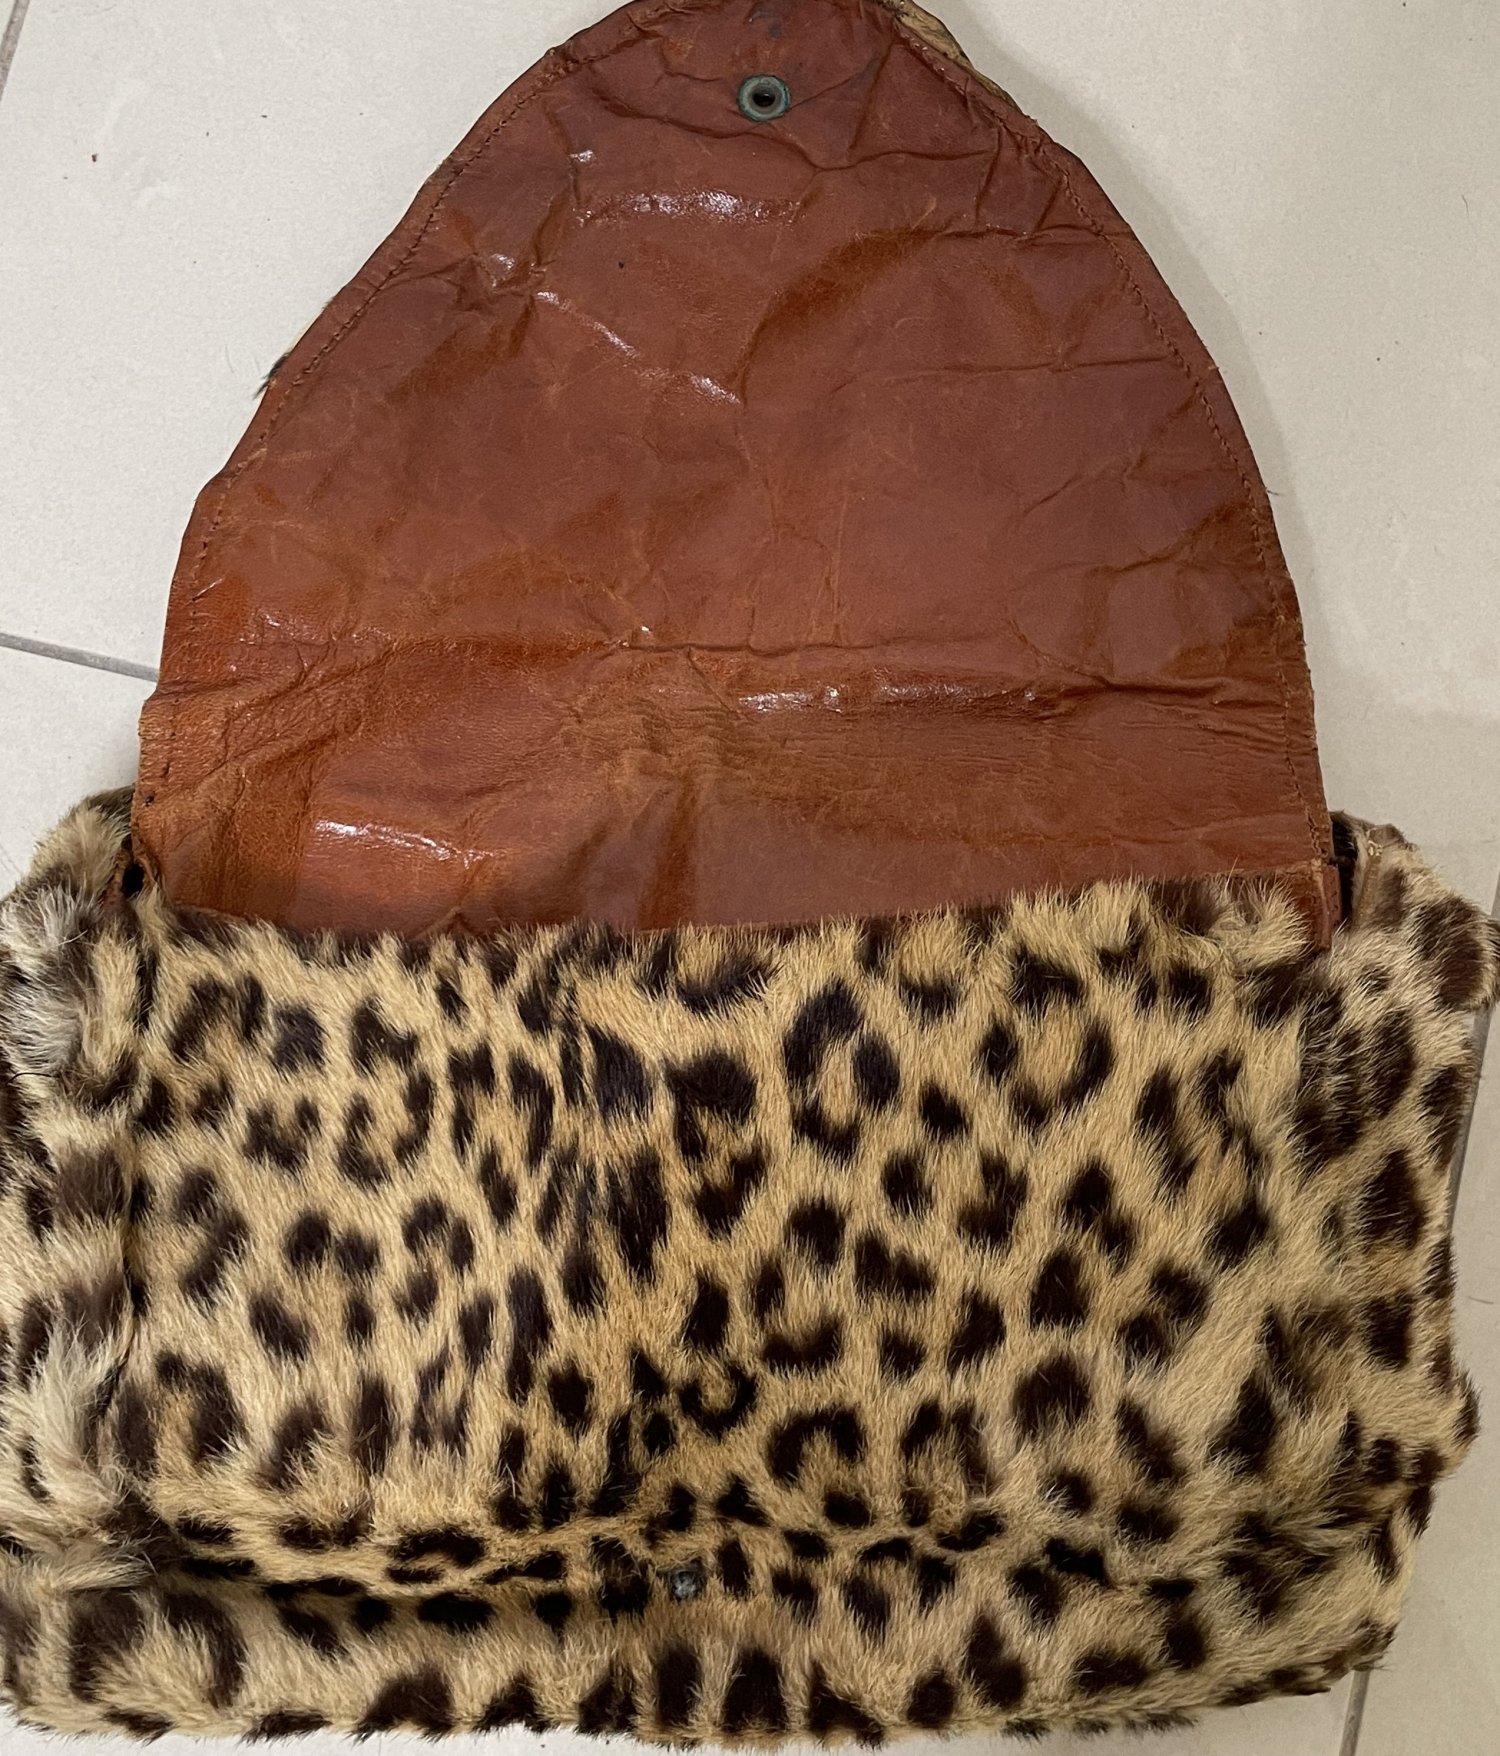 1930s Leopard Fur Bag Restore or Display 